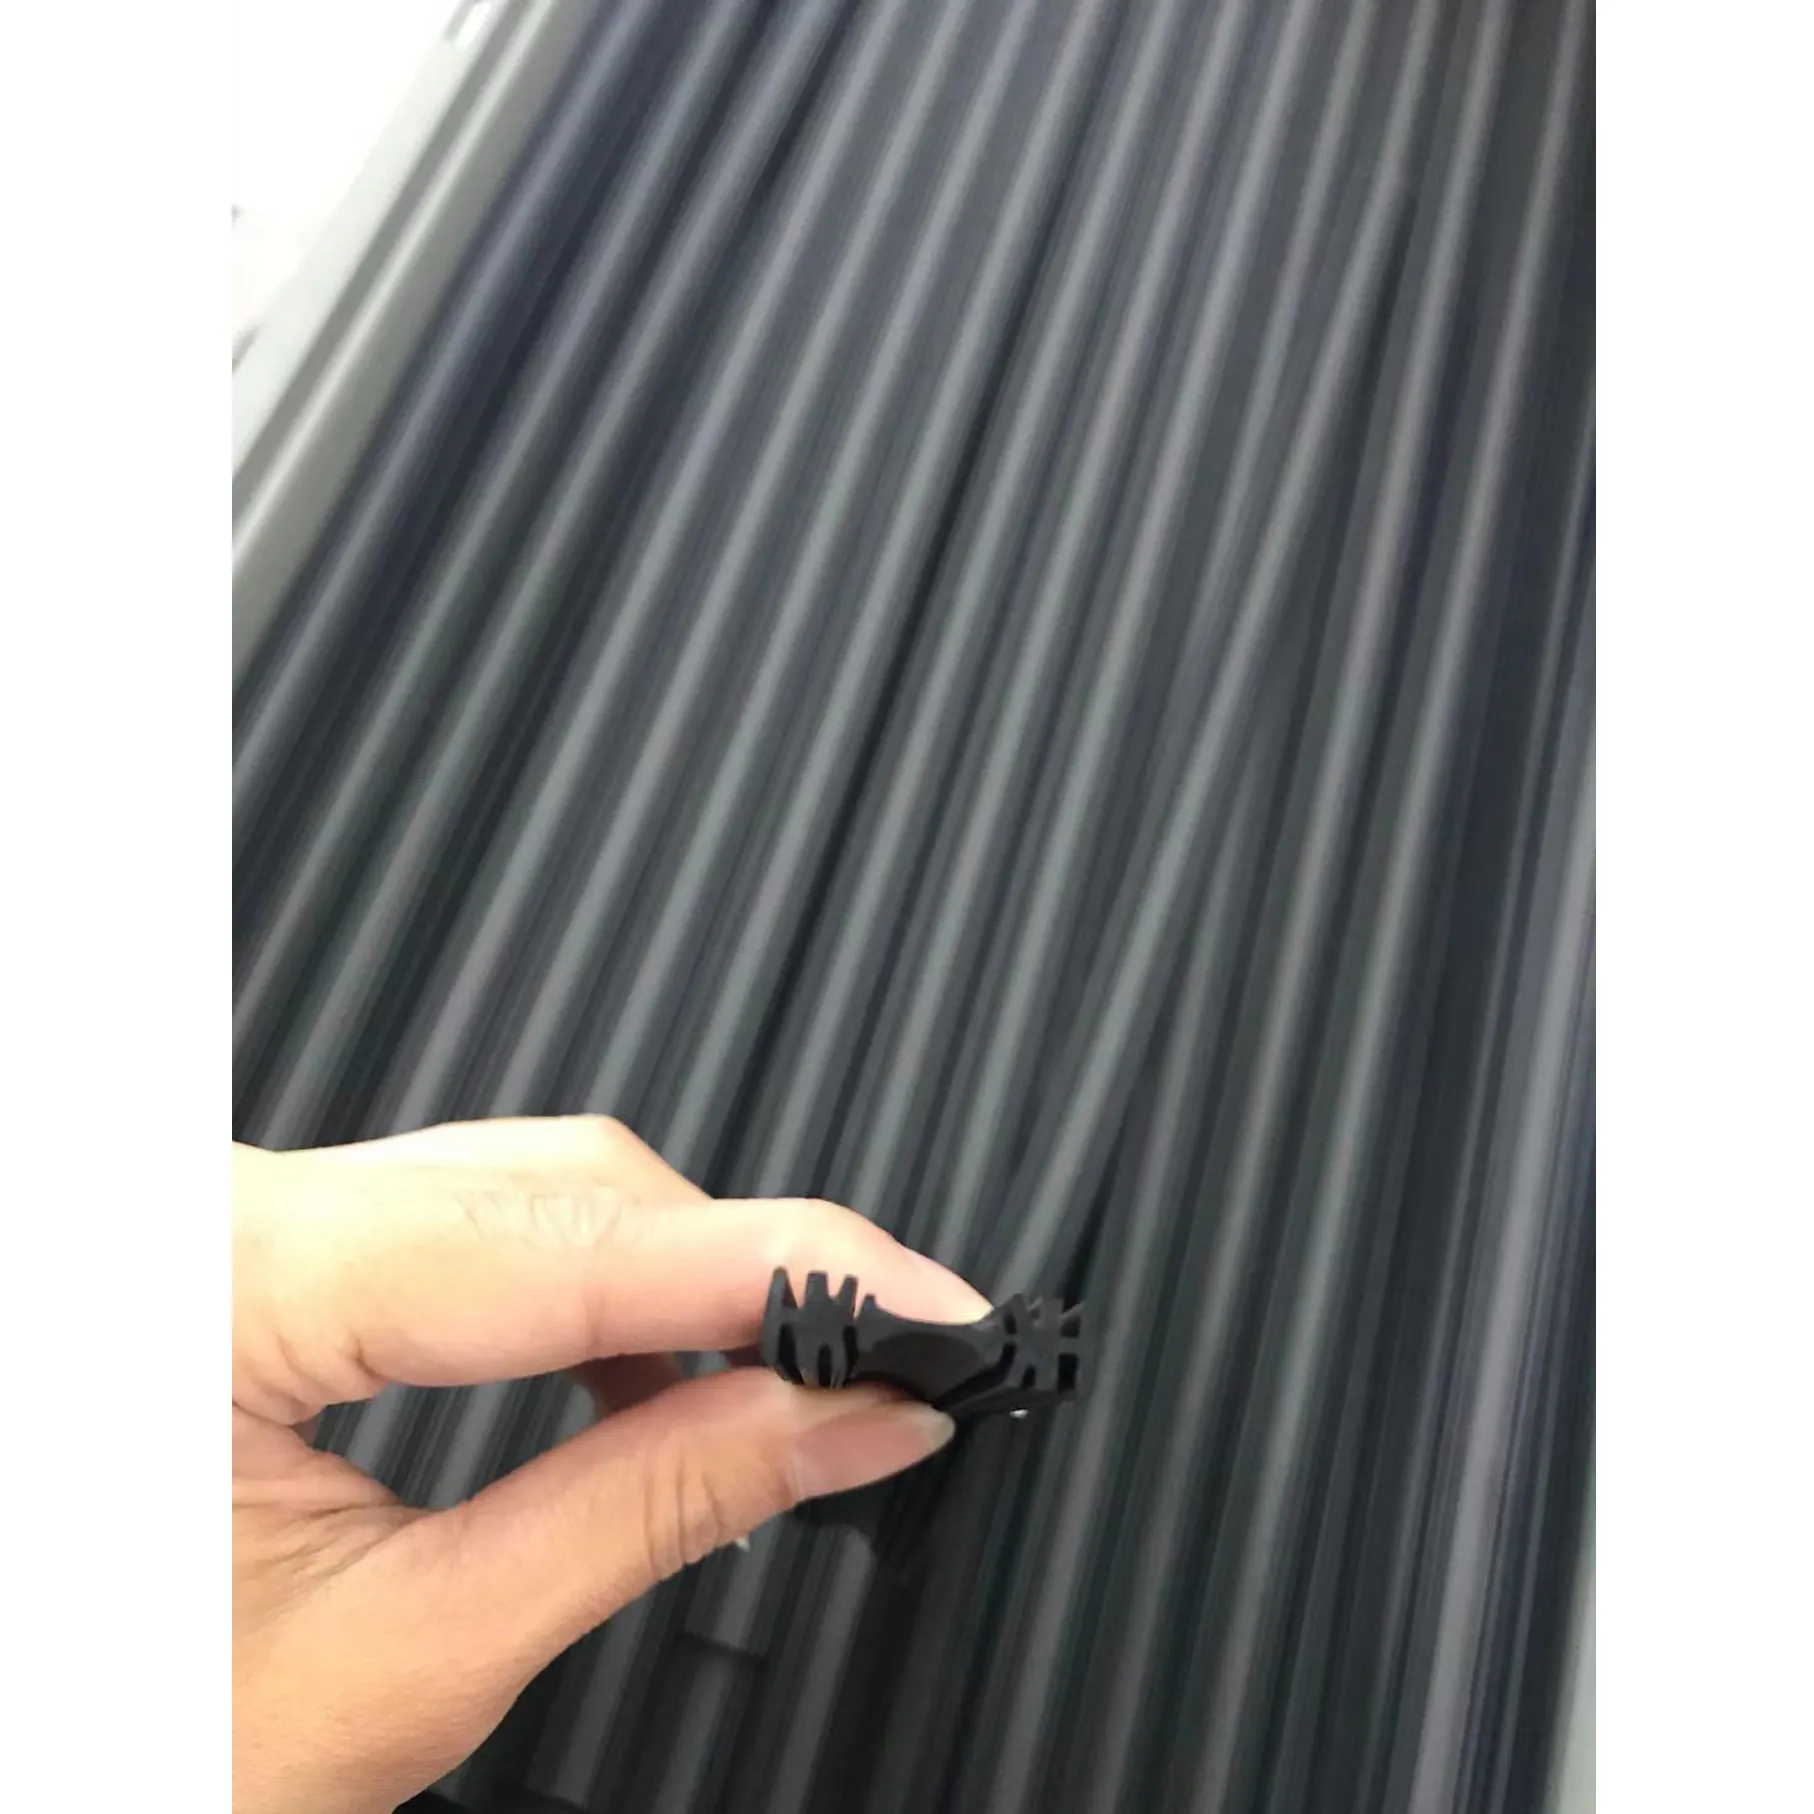 Diamond Quality A3 Year Of 2021 Size 650mm 475mm Soft Blade Car Wiper